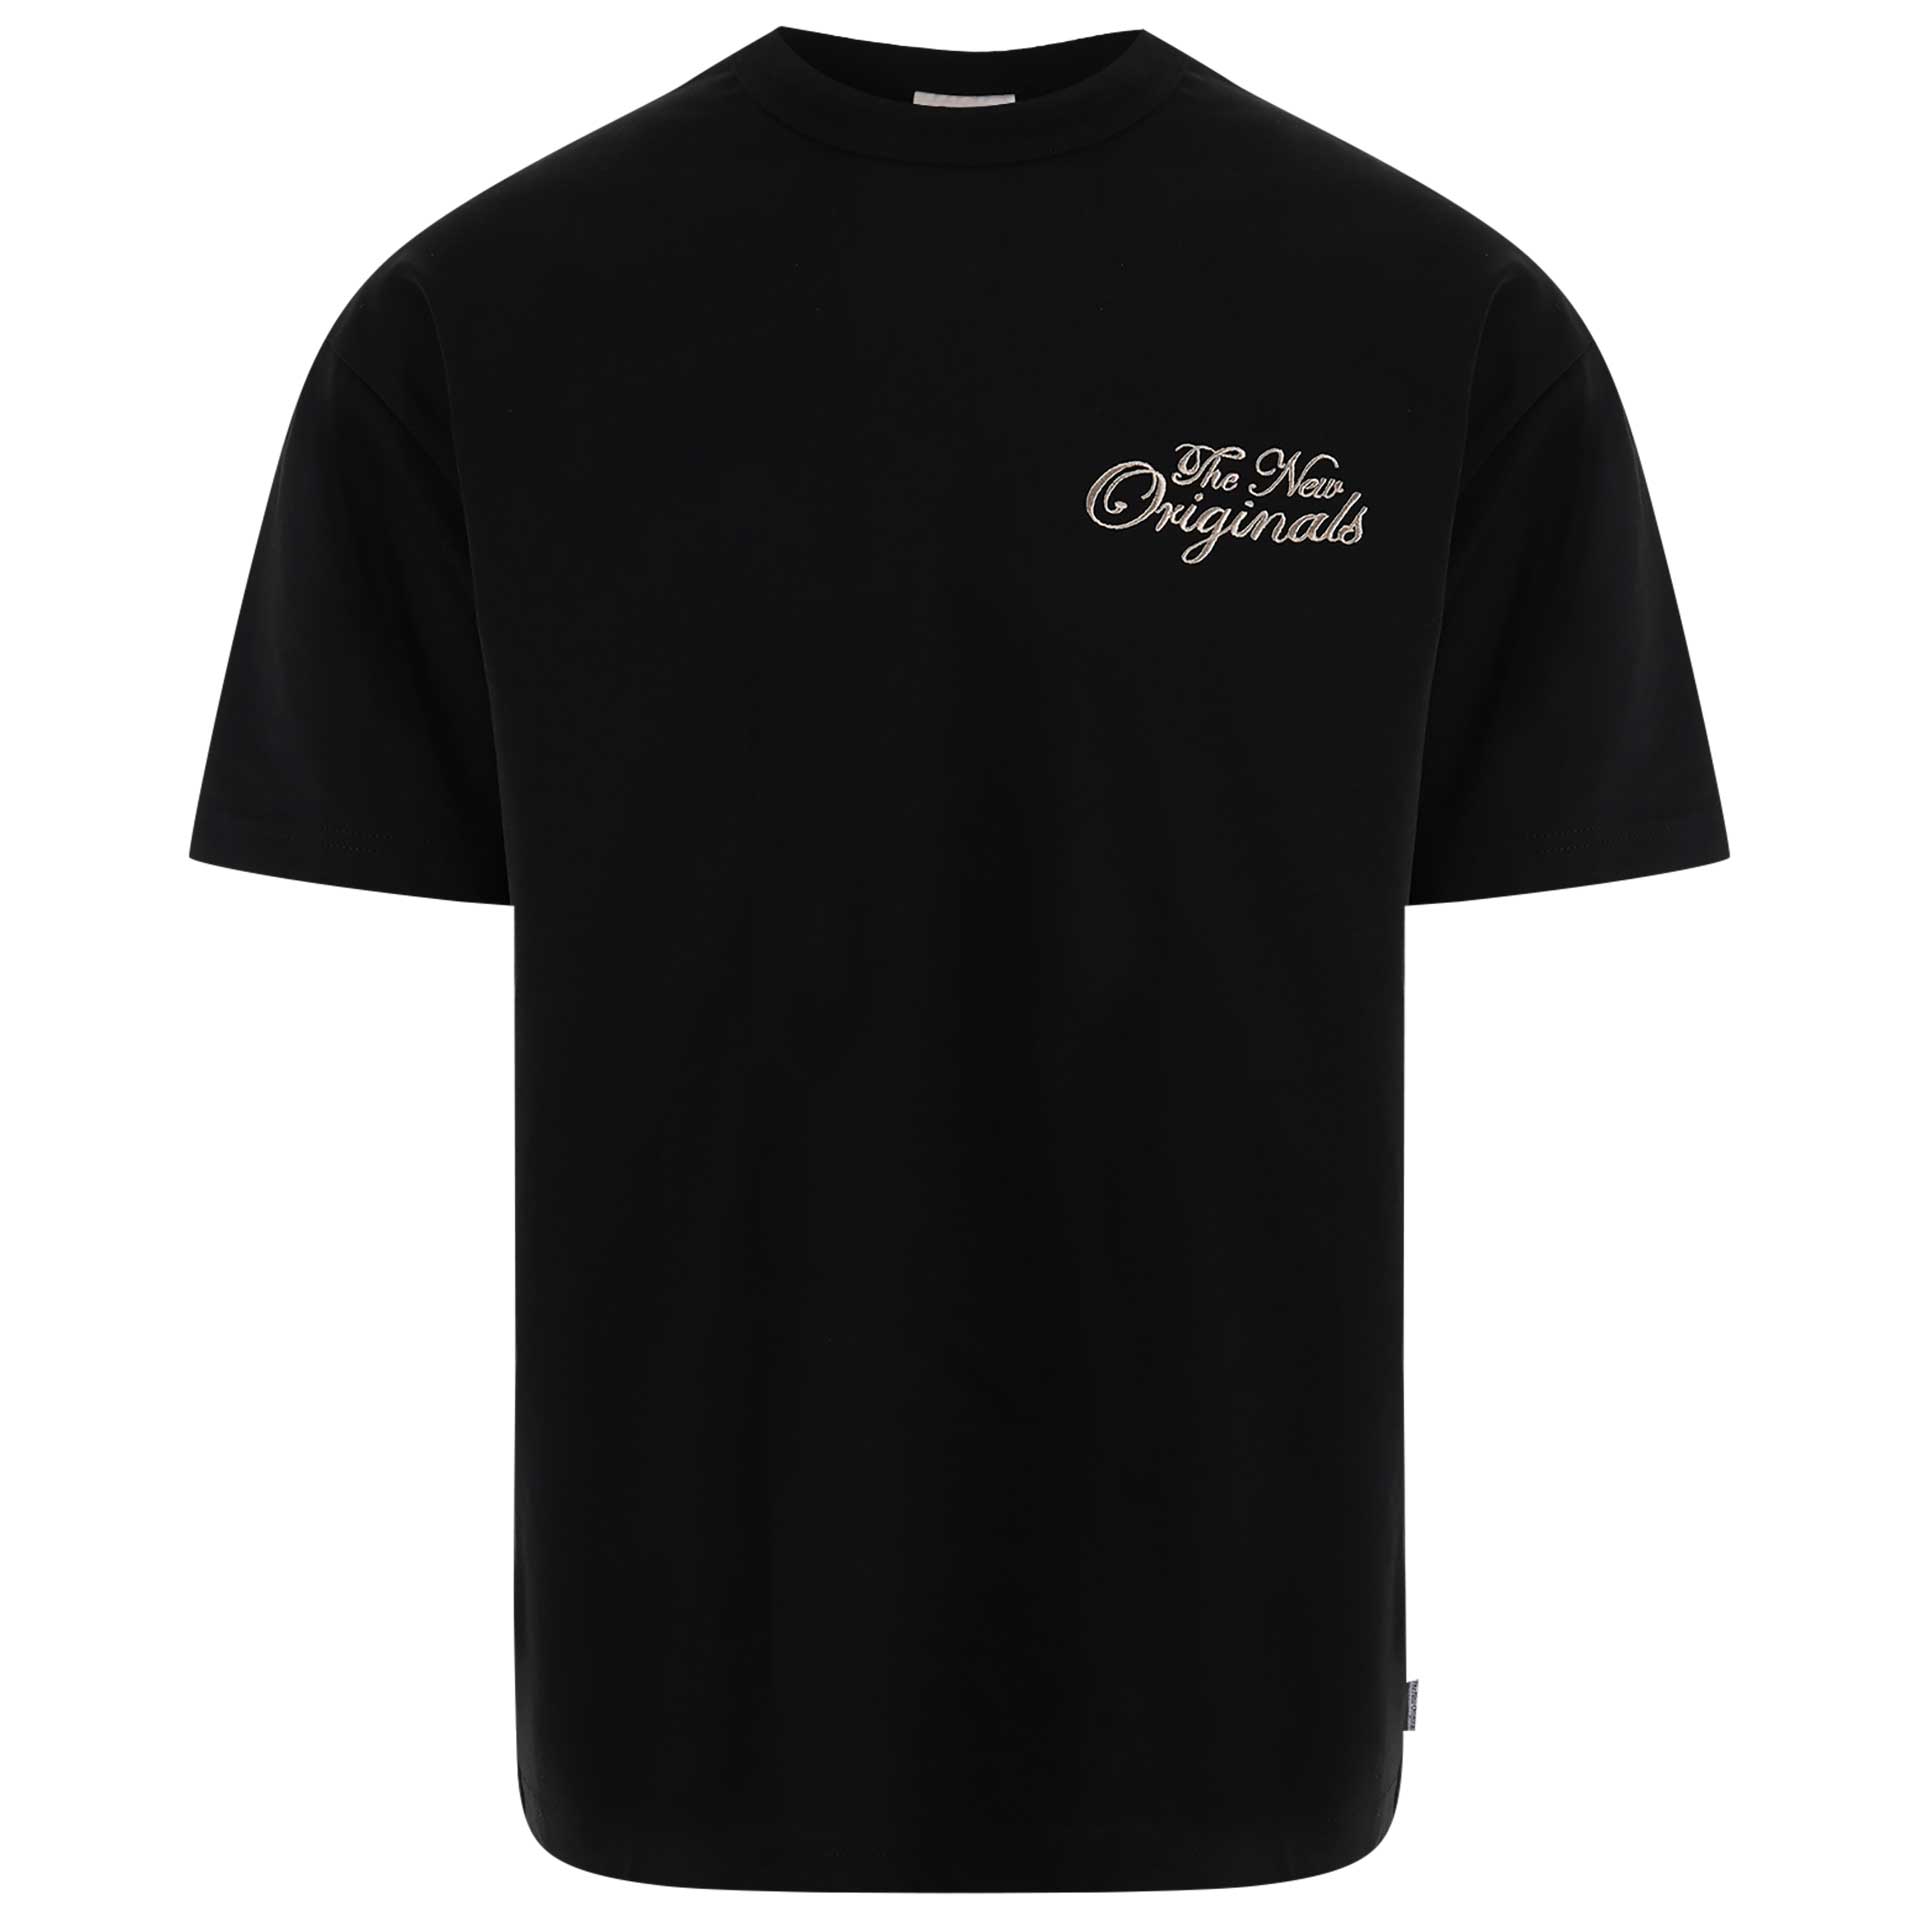 The New Originals Clothing T-shirt Paint Box Tee 1